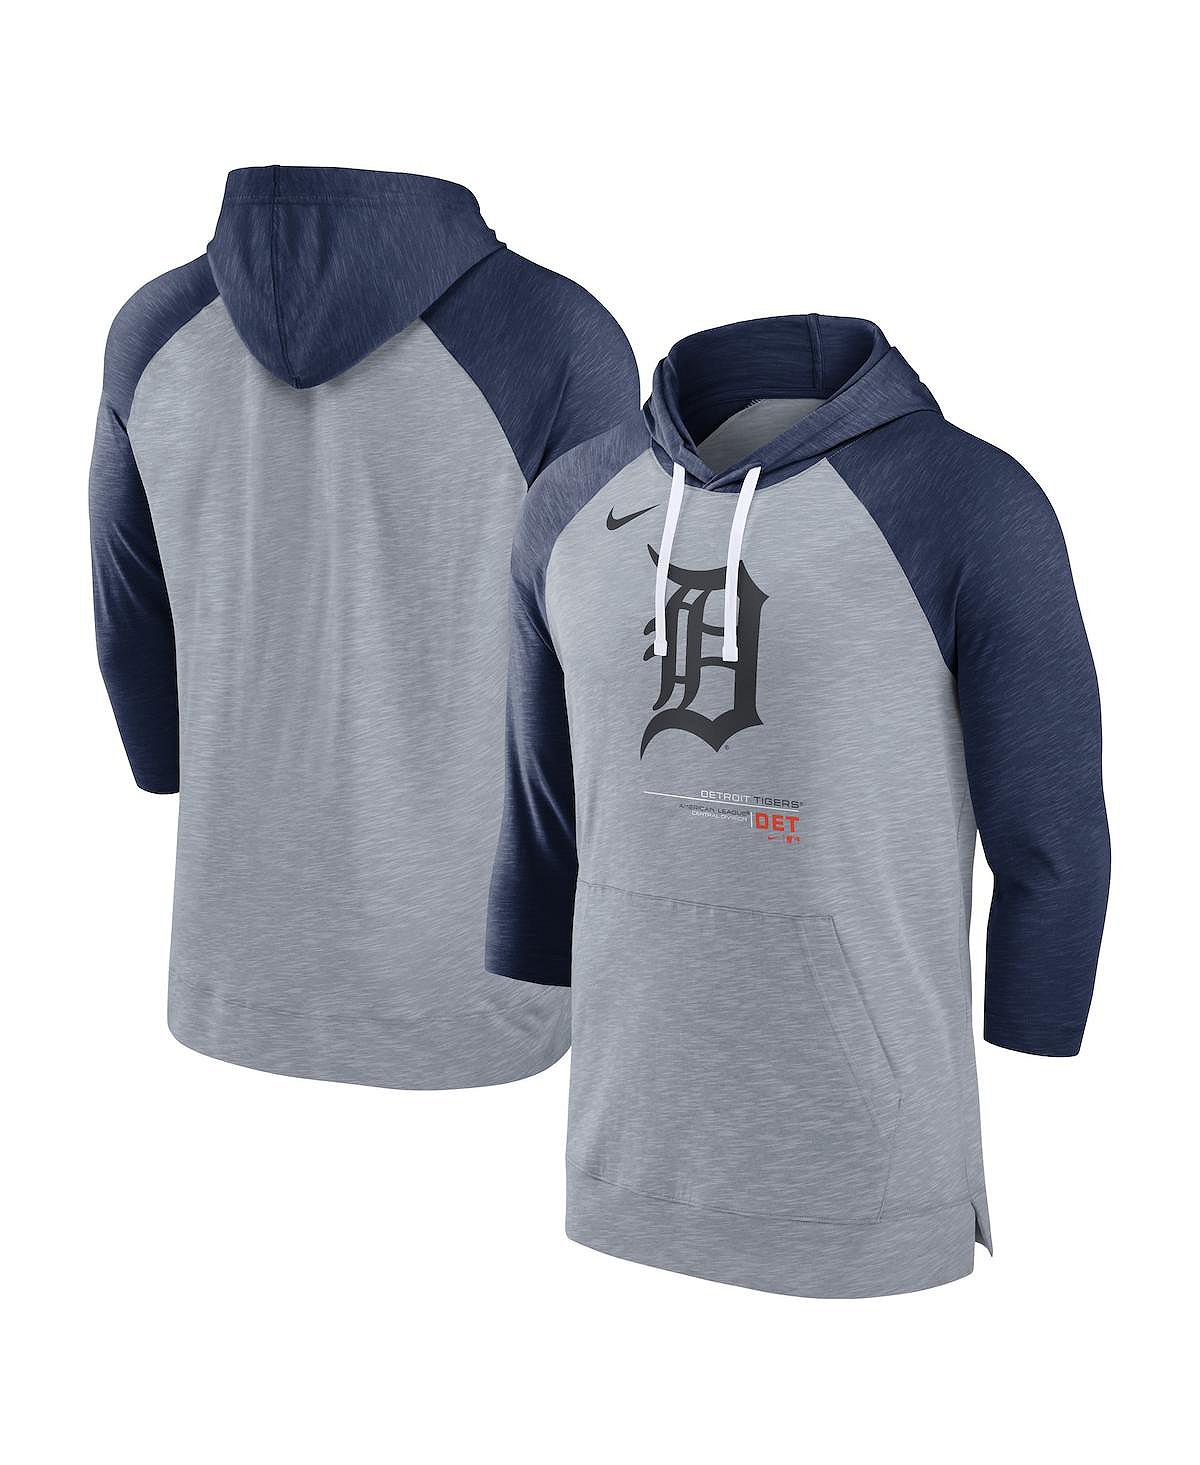 Мужской пуловер с капюшоном с капюшоном цвета реглан, серый Хизер, темно-синий Хизер Detroit Tigers Бейсбол реглан с рукавами 3/4 Nike